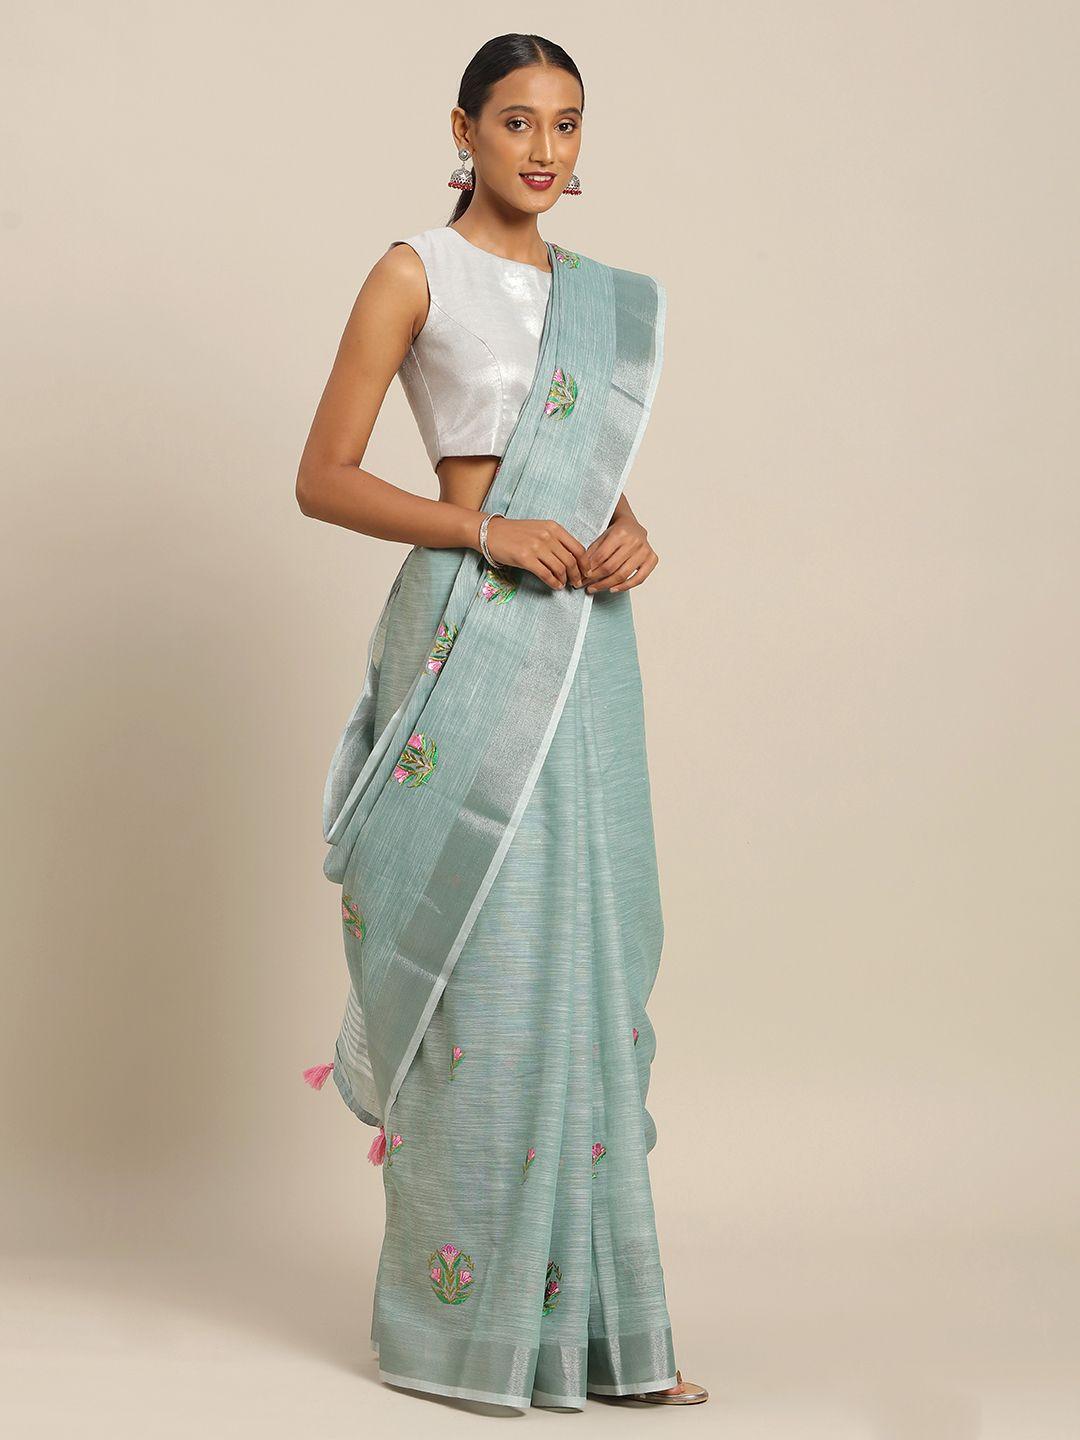 sangam prints grey embroidered linen blend saree